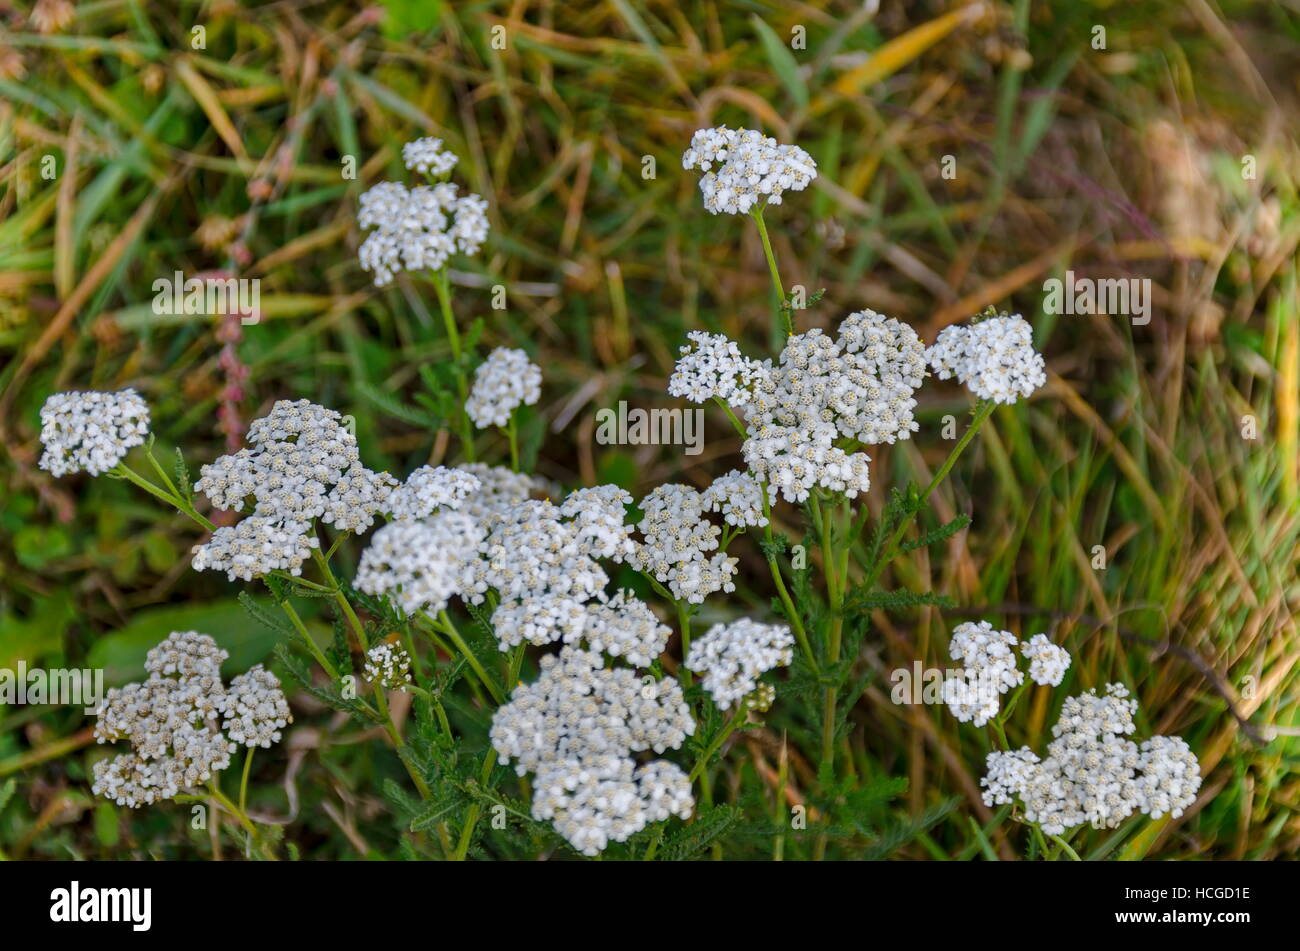 Yarrow flowers or Achillea millefolium in meadow, Plana mountain, Bulgaria Stock Photo